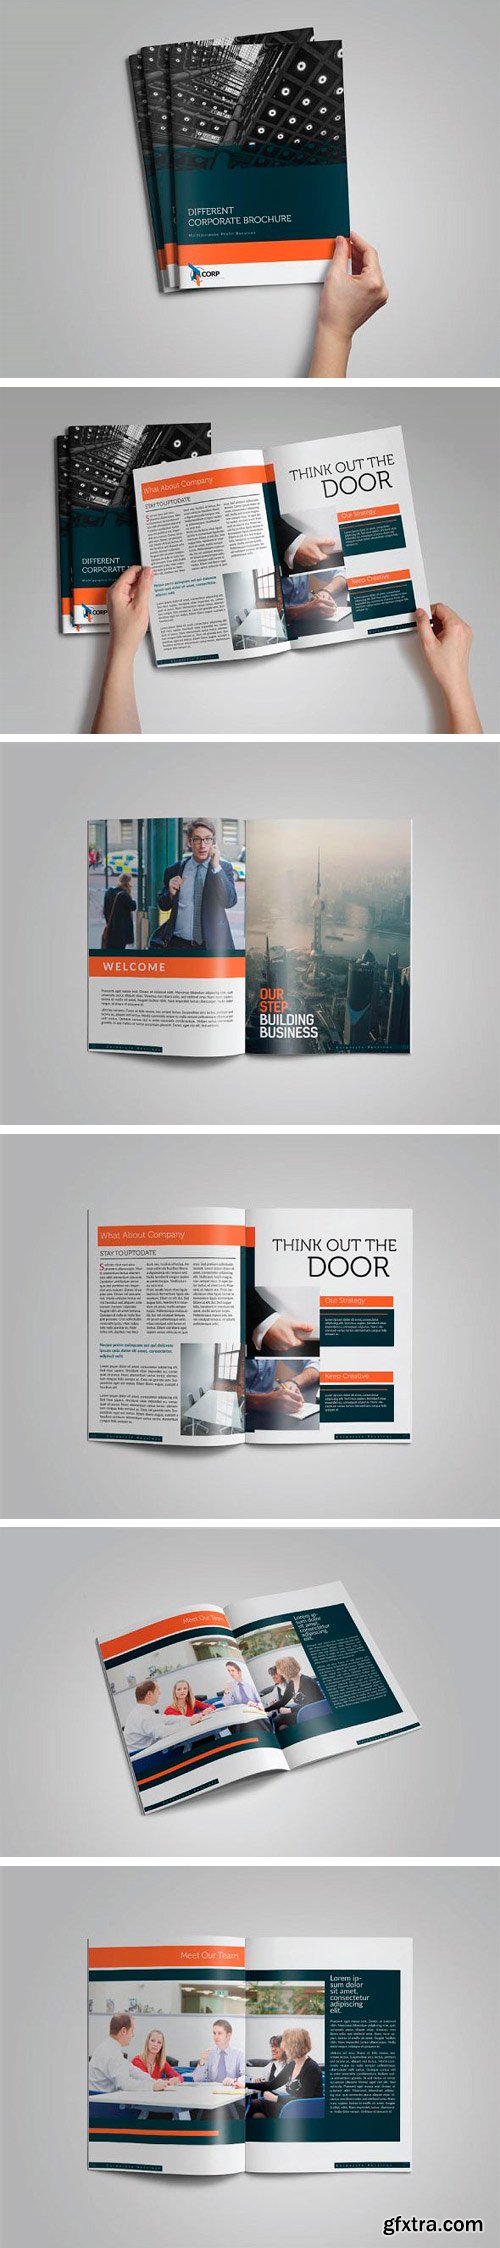 CM 1604544 - Amazing Brochure Corporate Potrait